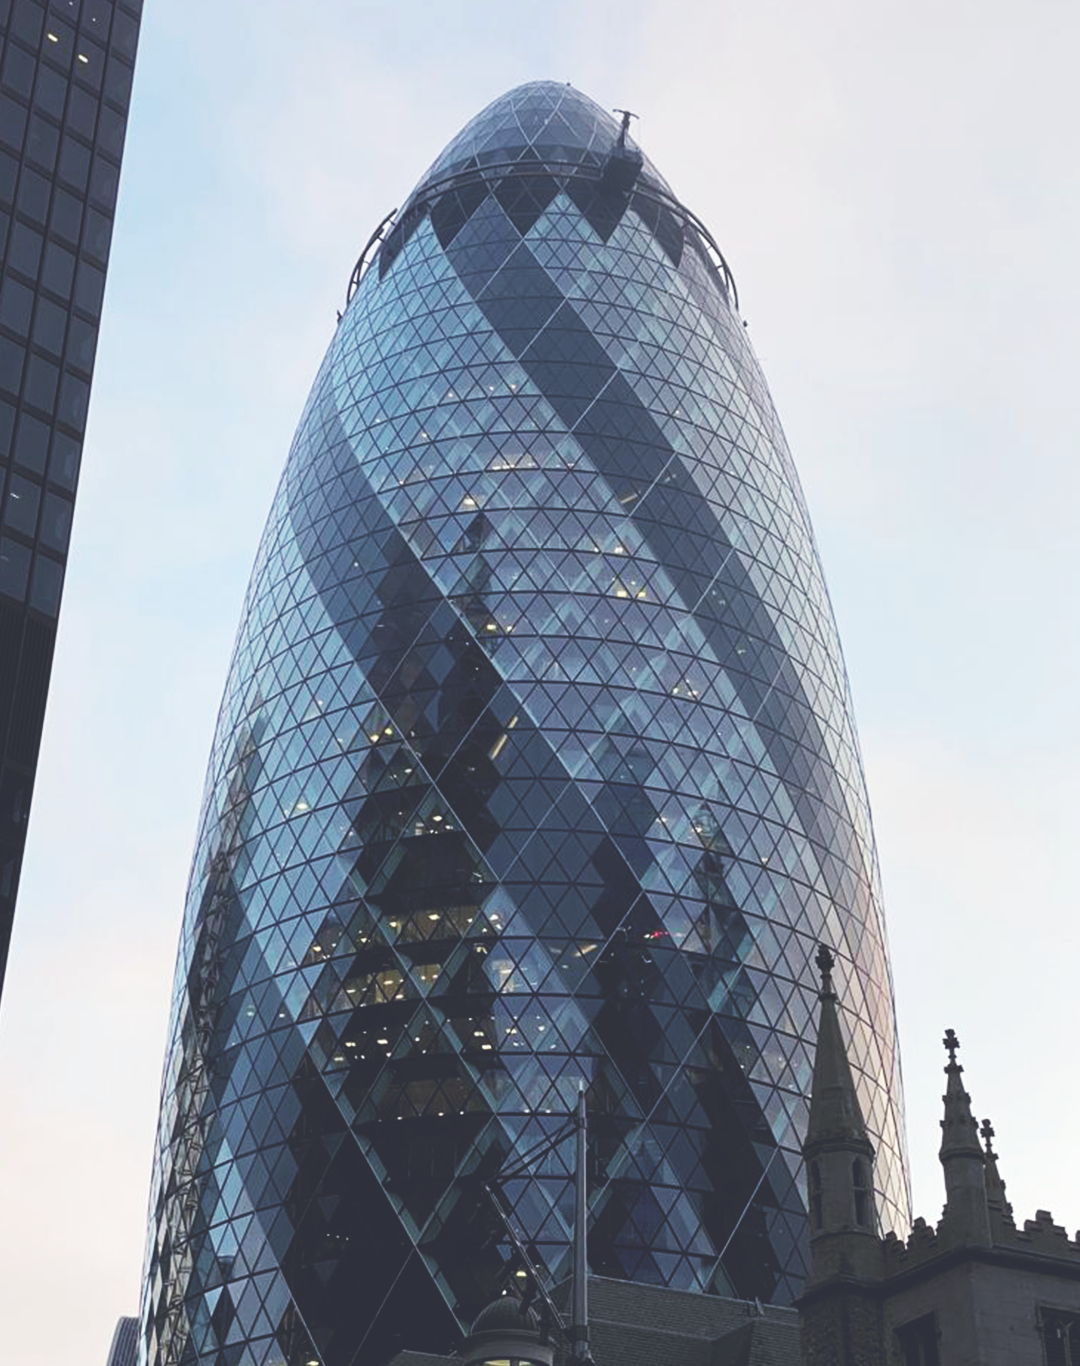 London building